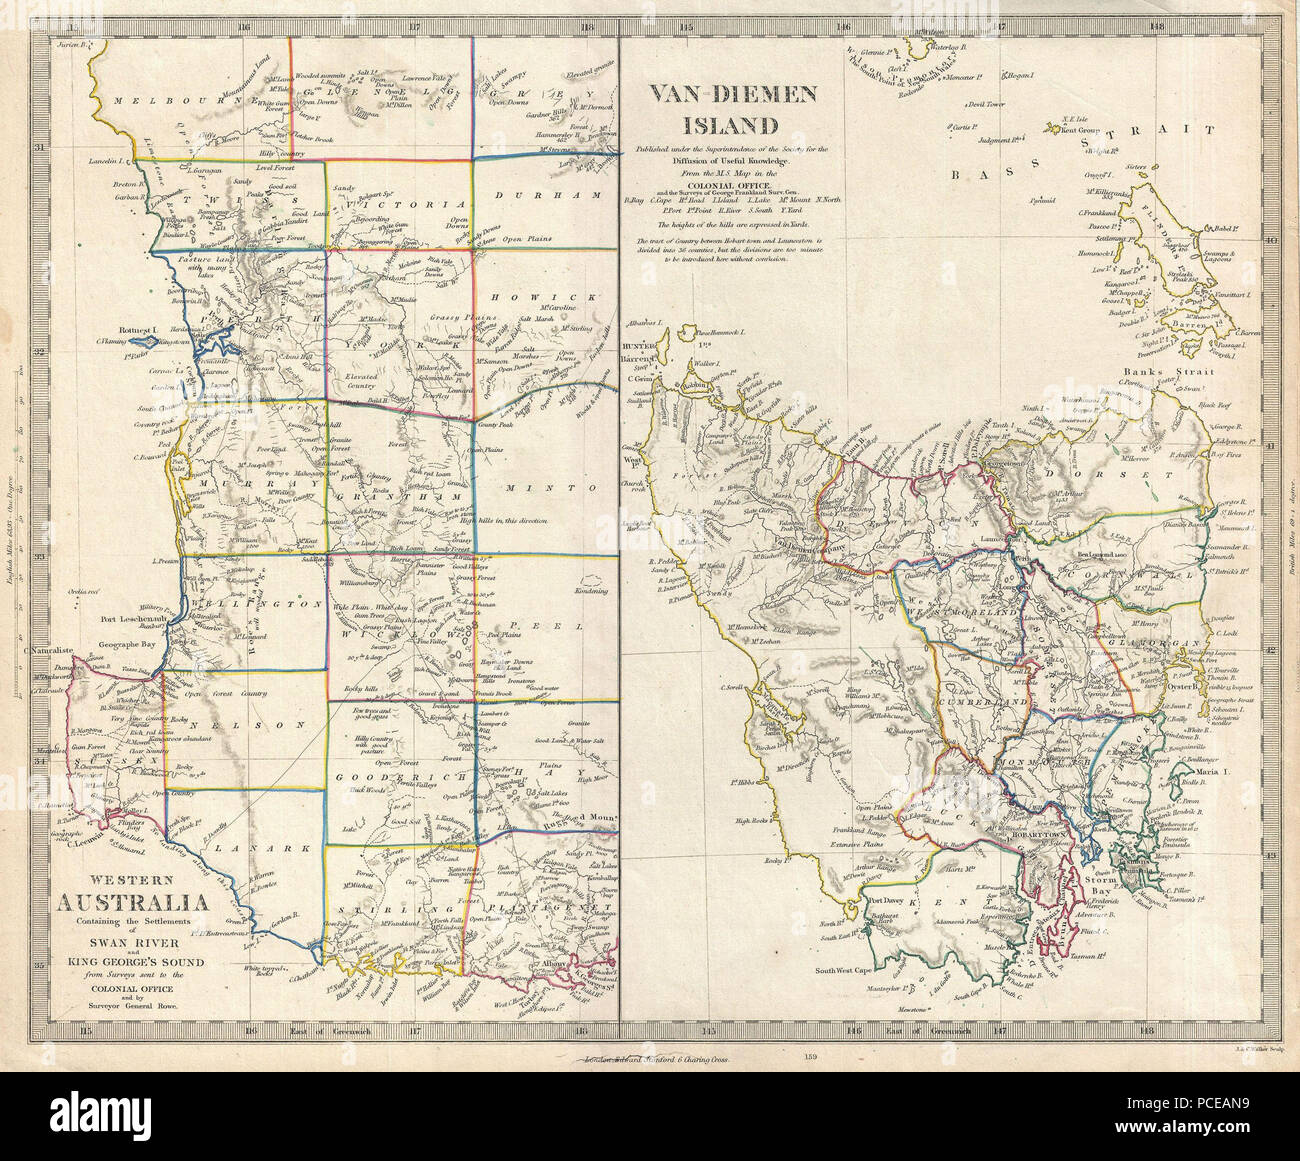 7 1849 S.D.U.K. Map of Tasmania or Van Diemen's Land and Western Australia - Geographicus - VanDiemen-sduk-1849 Stock Photo